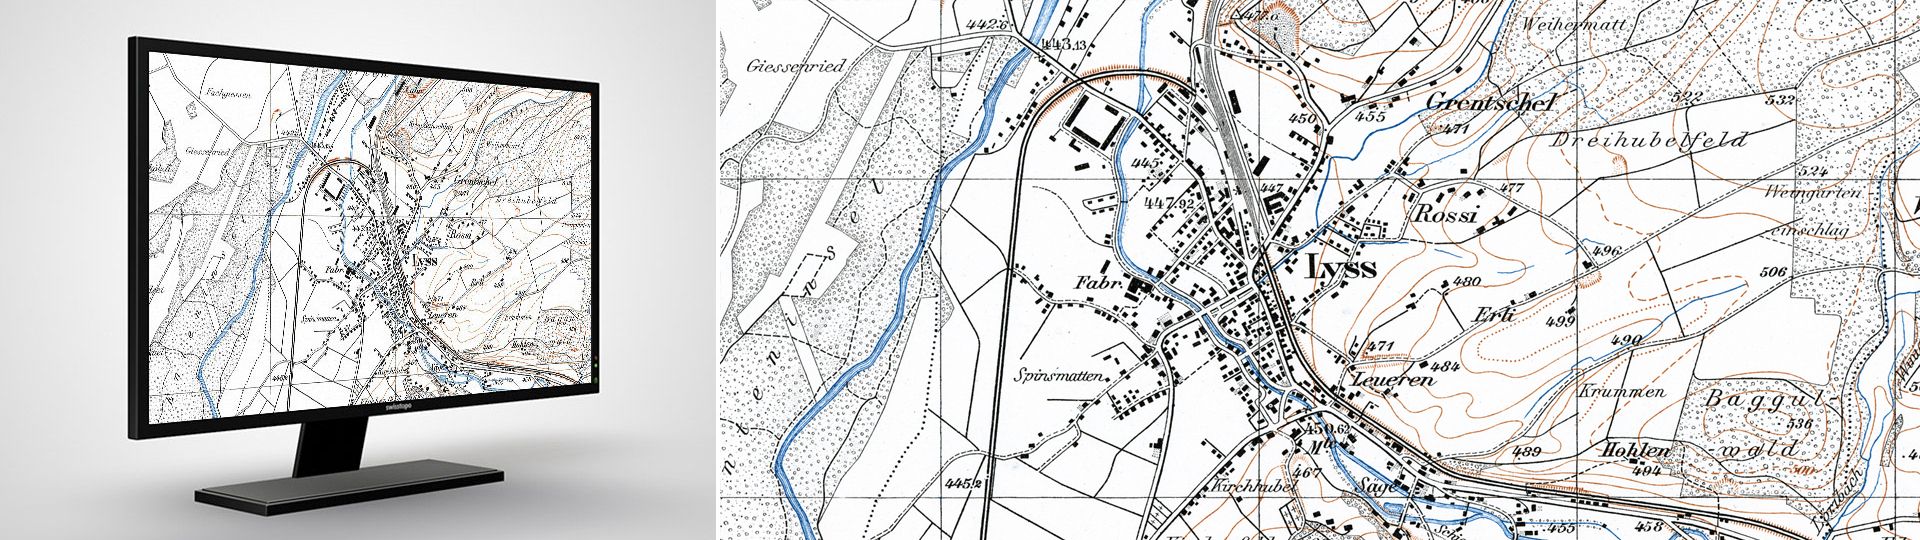 Siegfried Map 1:50,000: georeferenced Siegfried Map 1:50,000